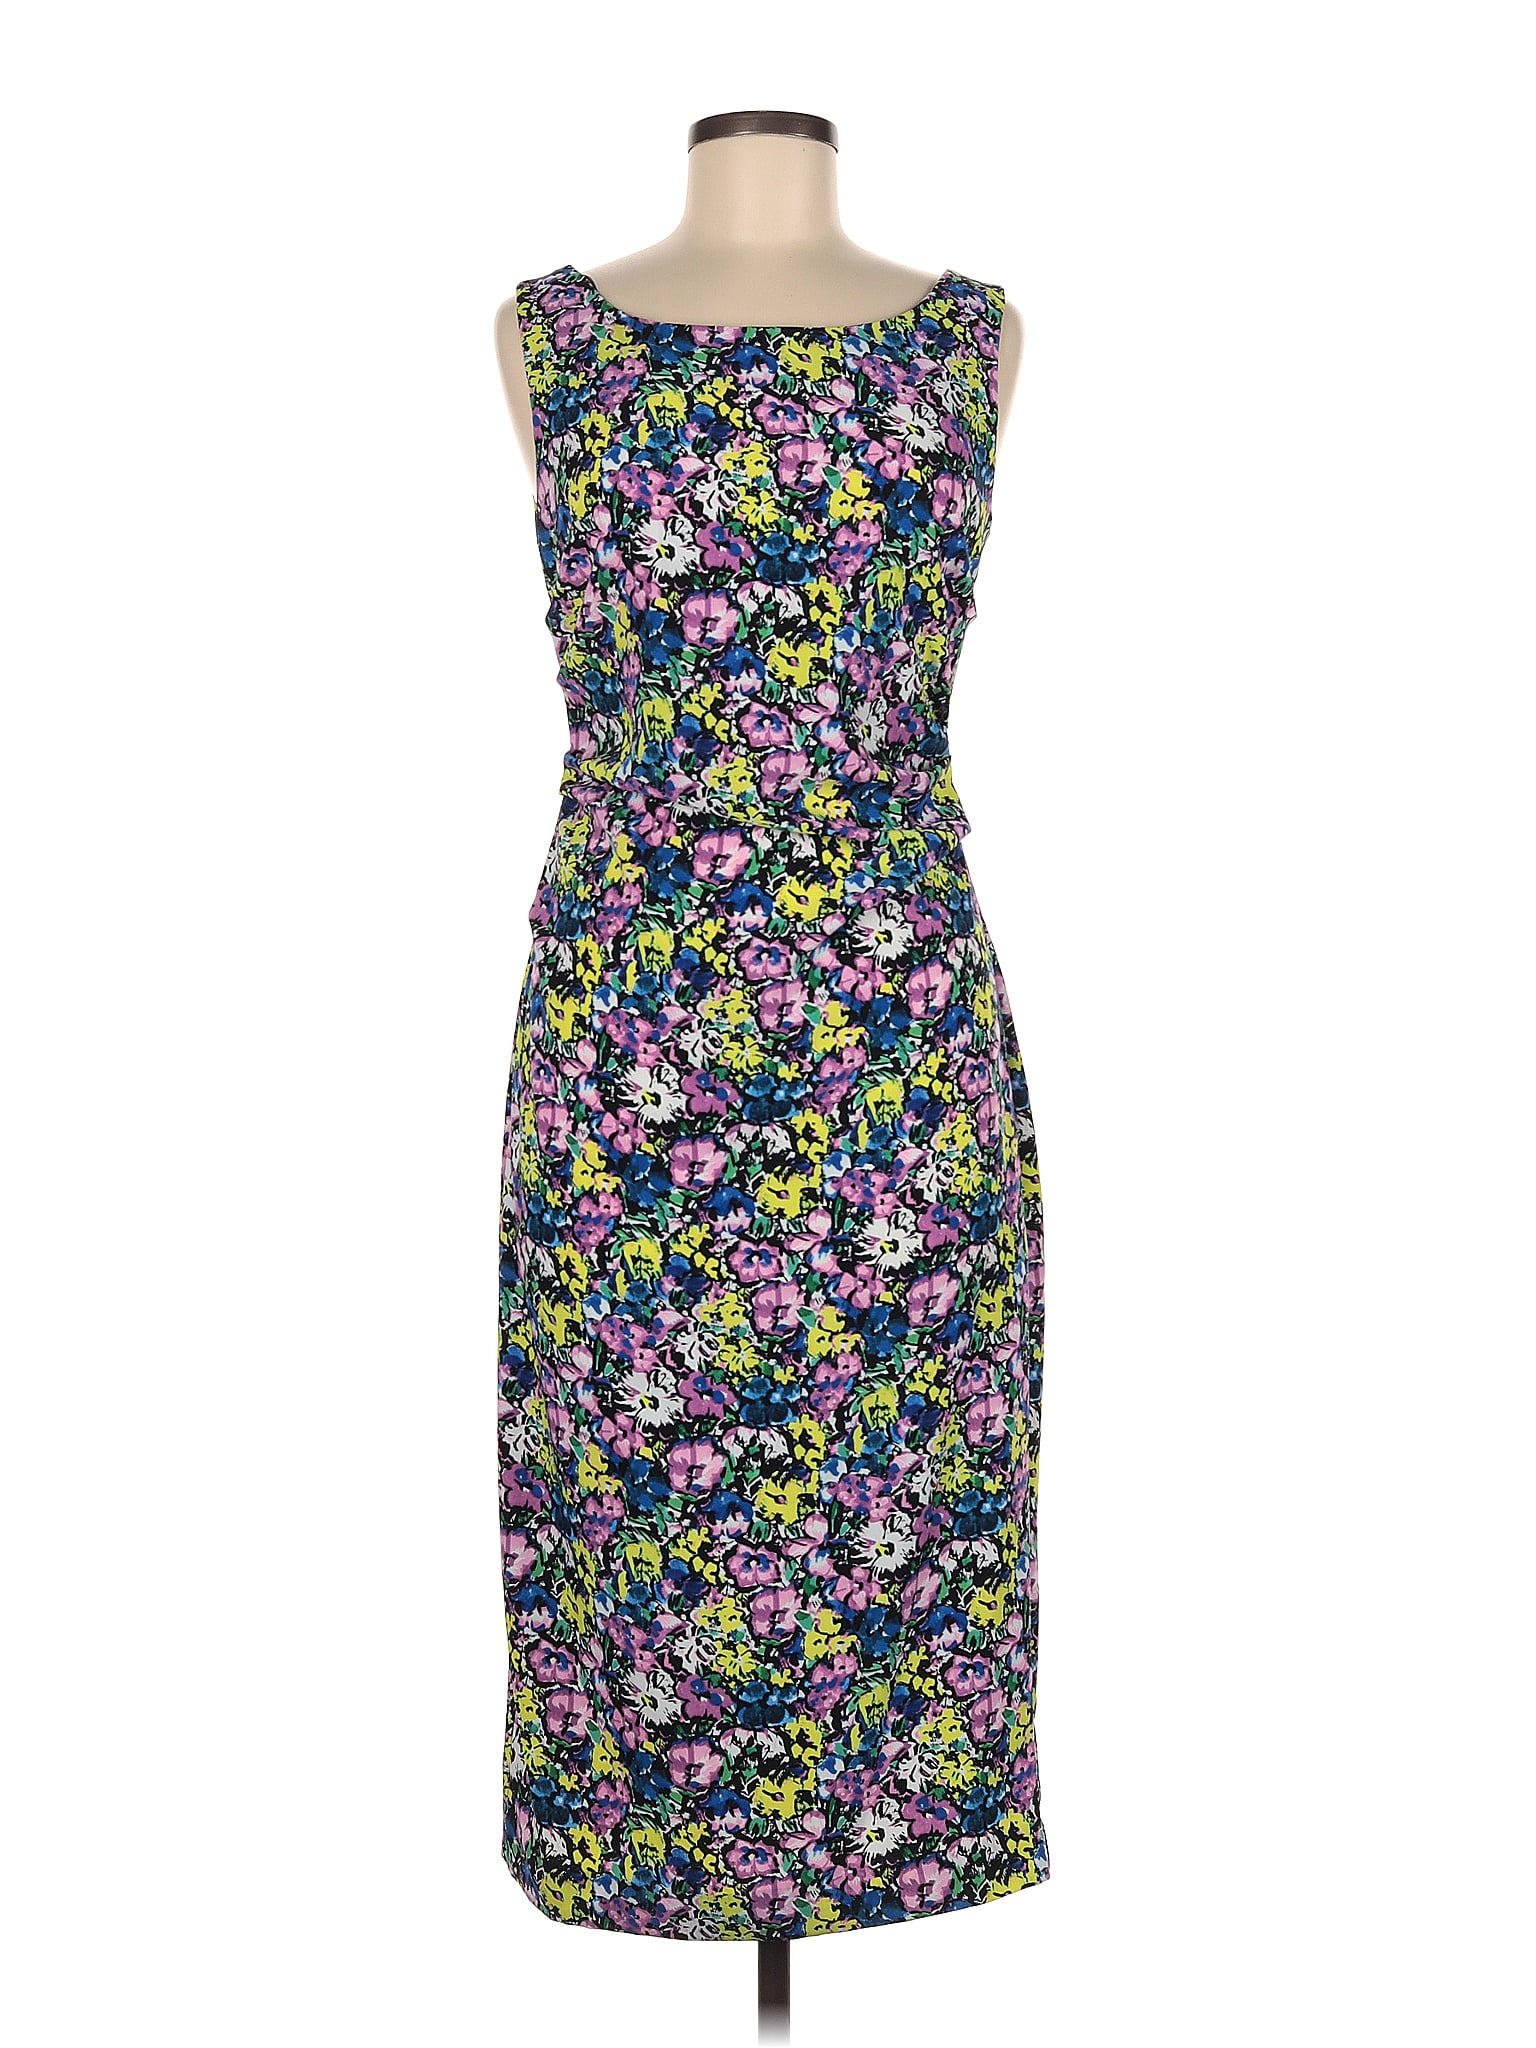 Zara Floral Multi Color Purple Casual Dress Size M - 46% off | ThredUp